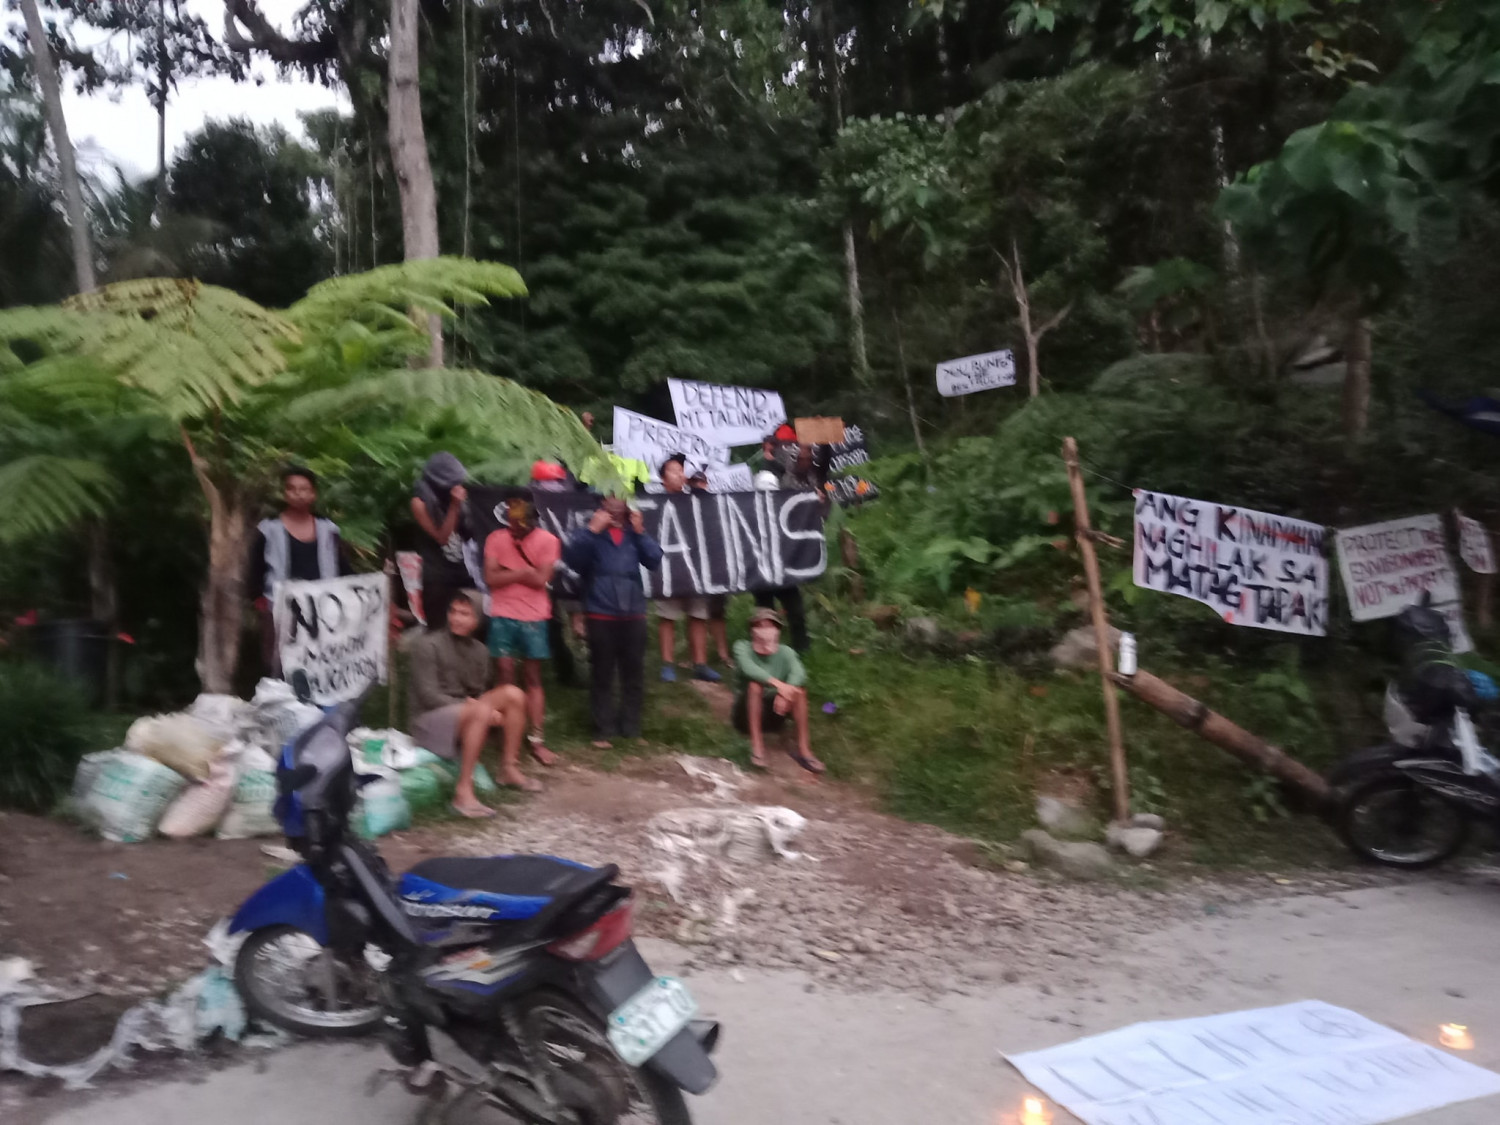 Talinis Ultramarathon Met With Protest